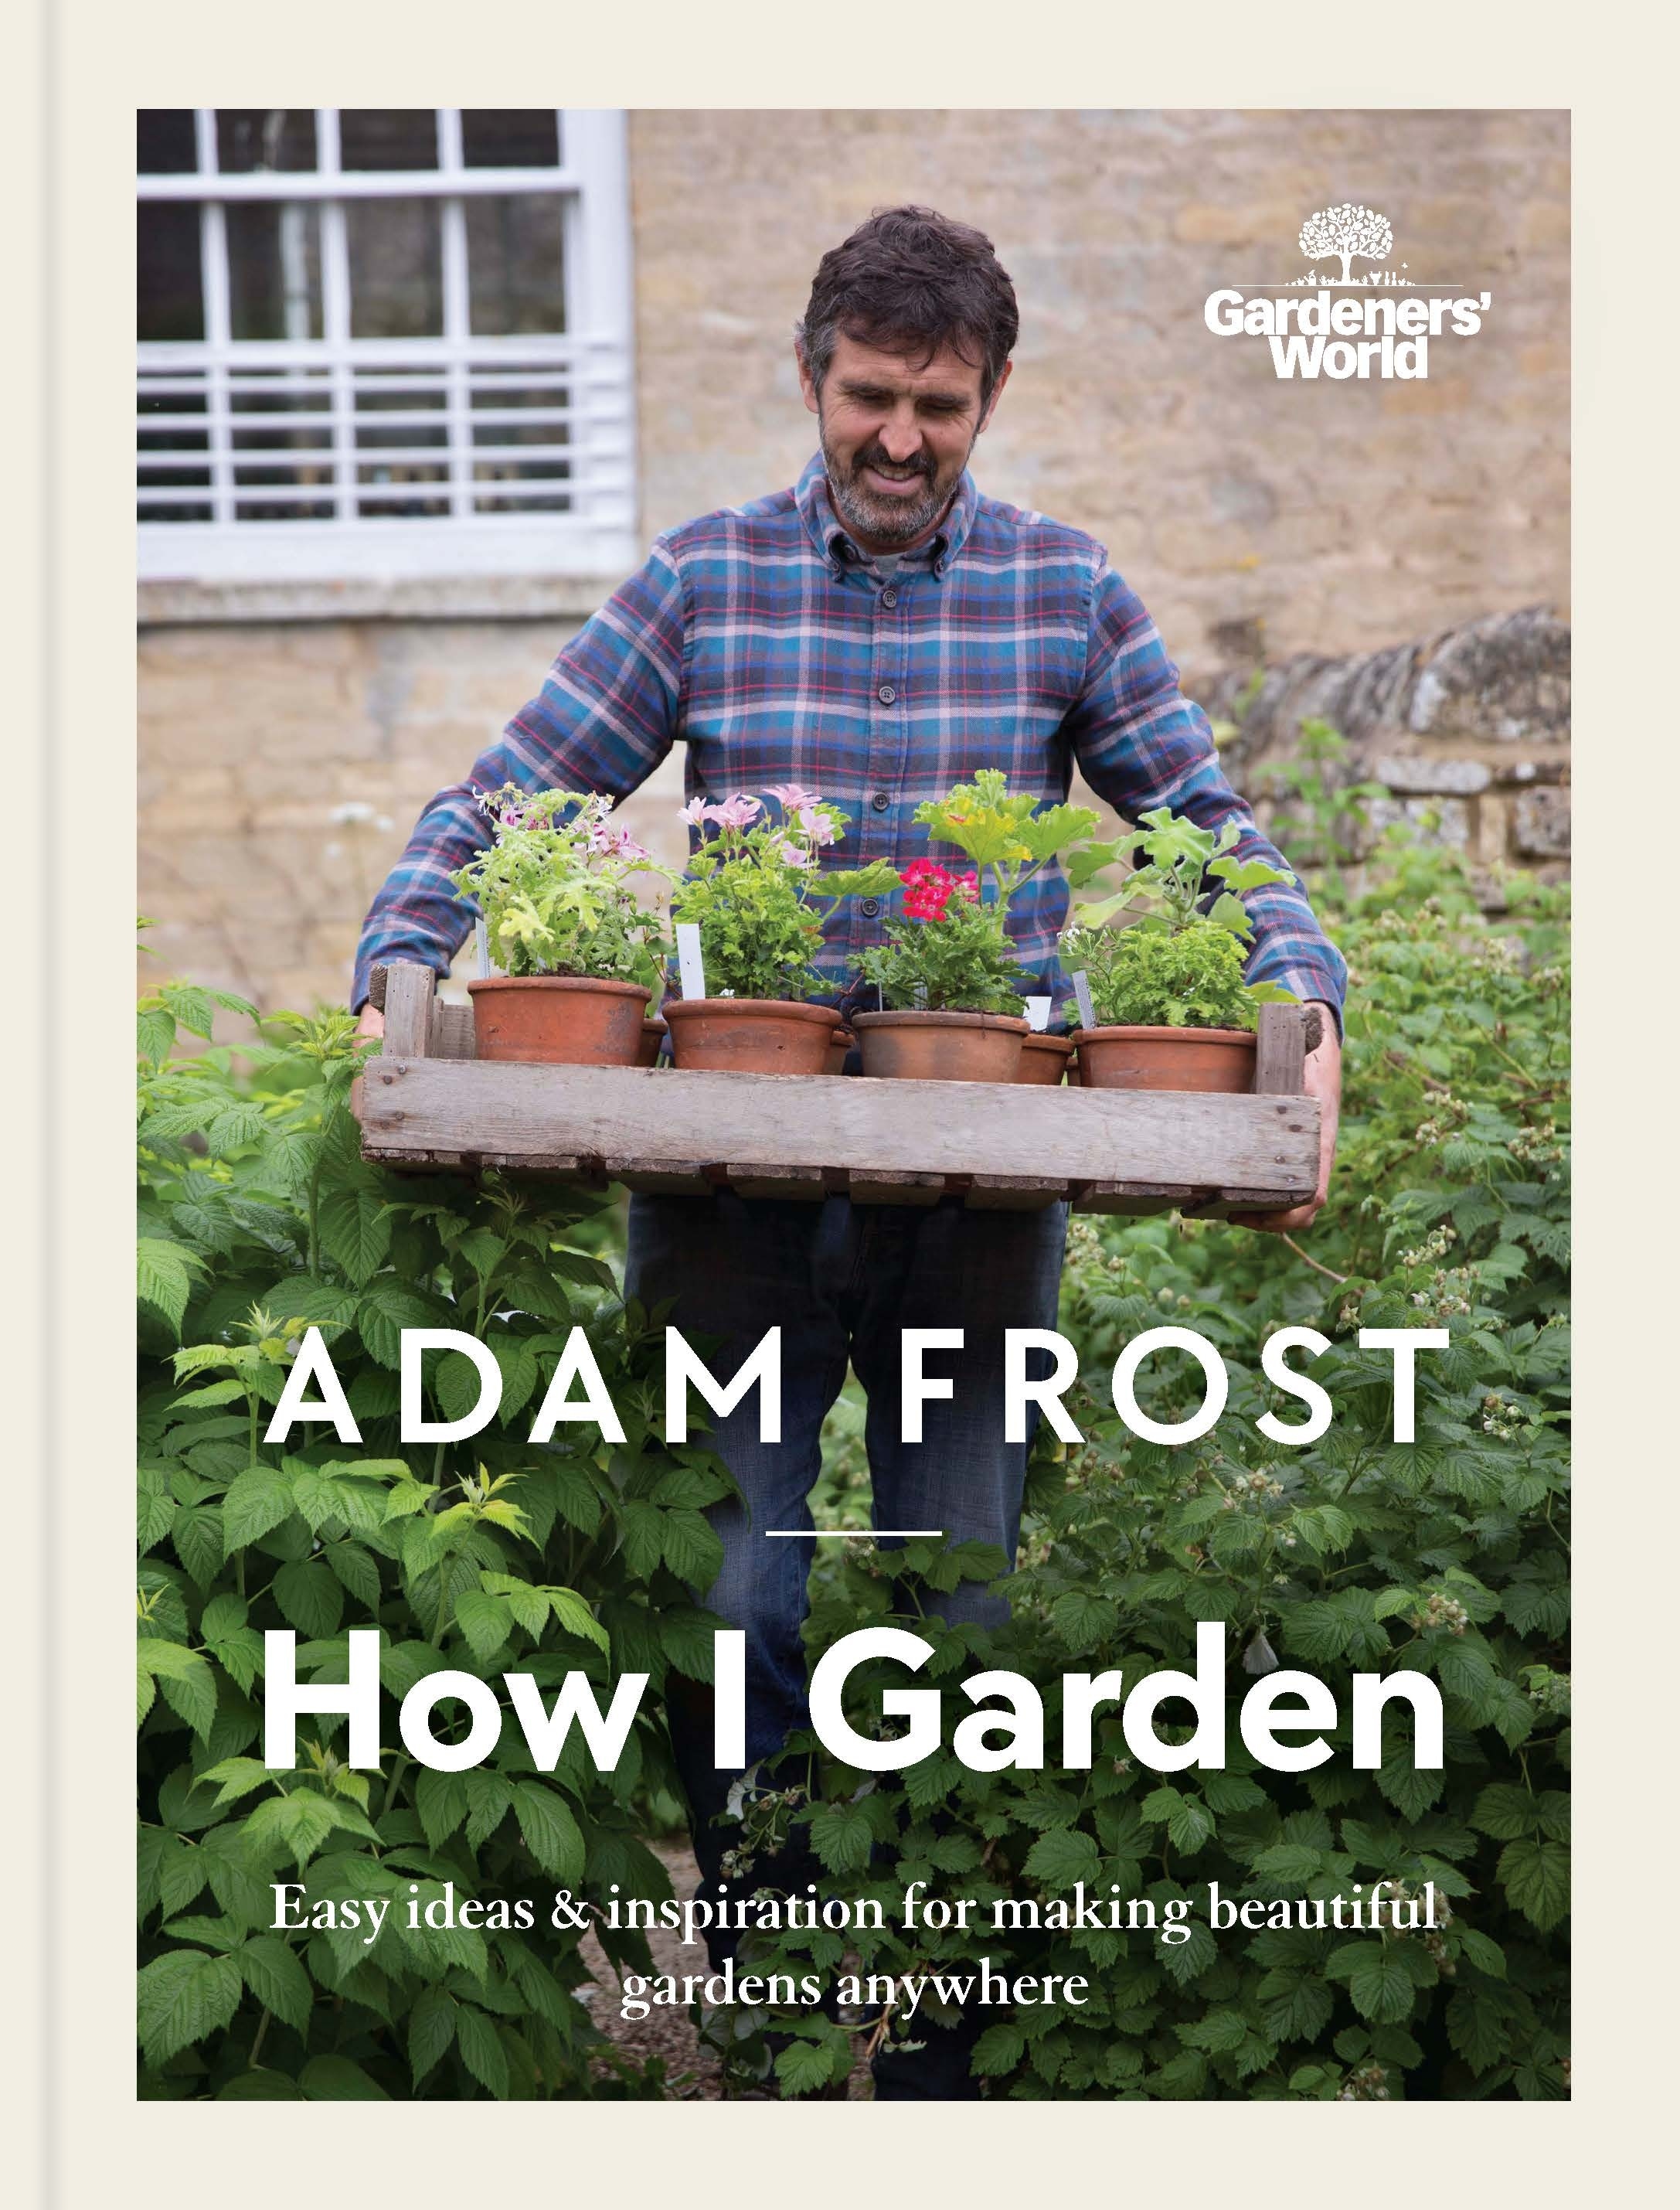 Book “Gardener’s World: How I Garden” by Adam Frost Design Limited — September 15, 2022